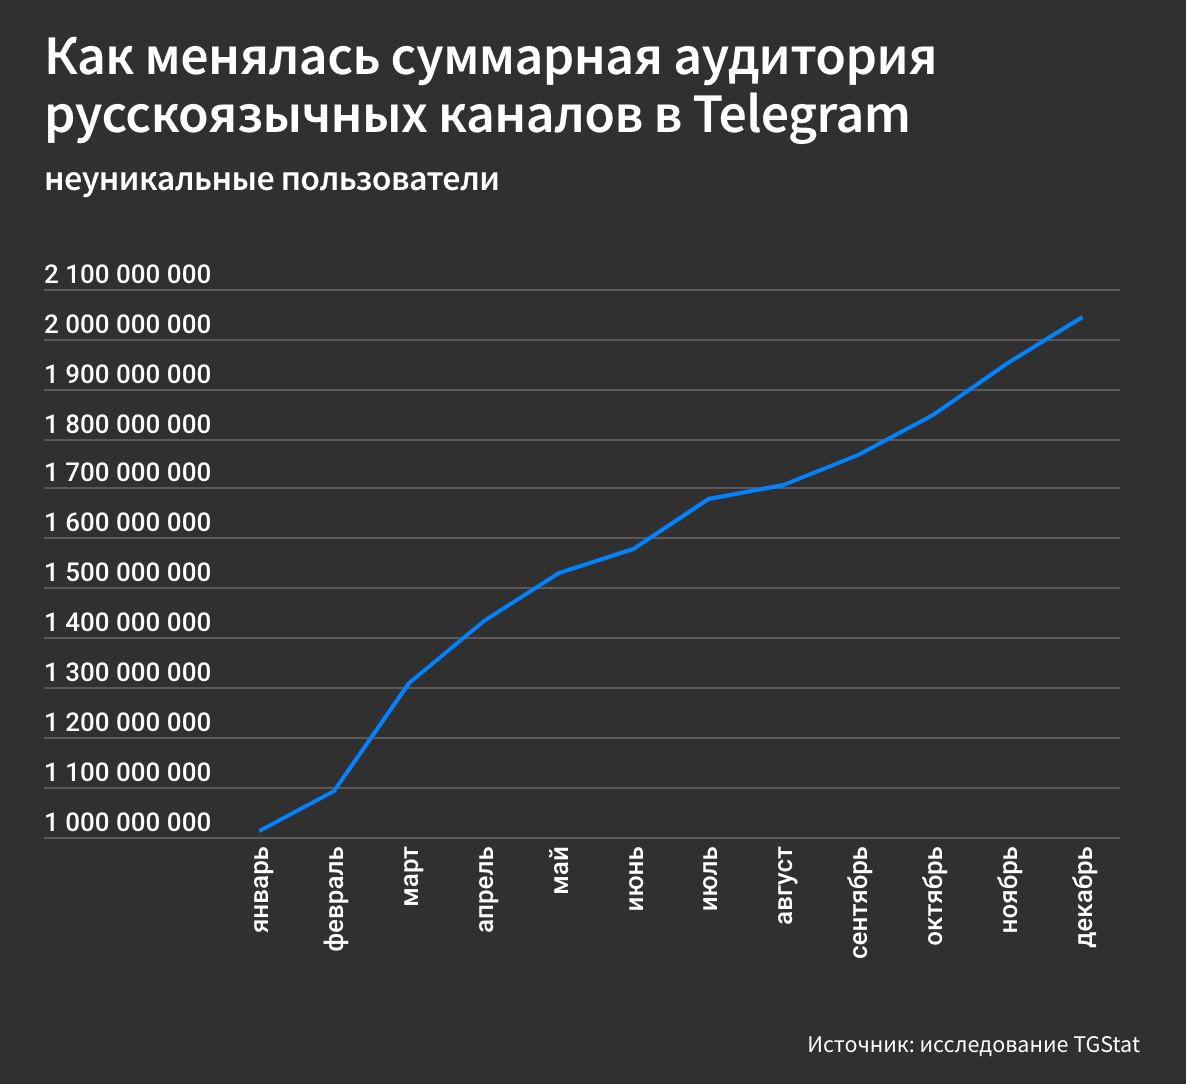 Аудитория русскоязычных каналов в Telegram выросла вдвое — с 1 млрд до 2 млрд за 2022 год